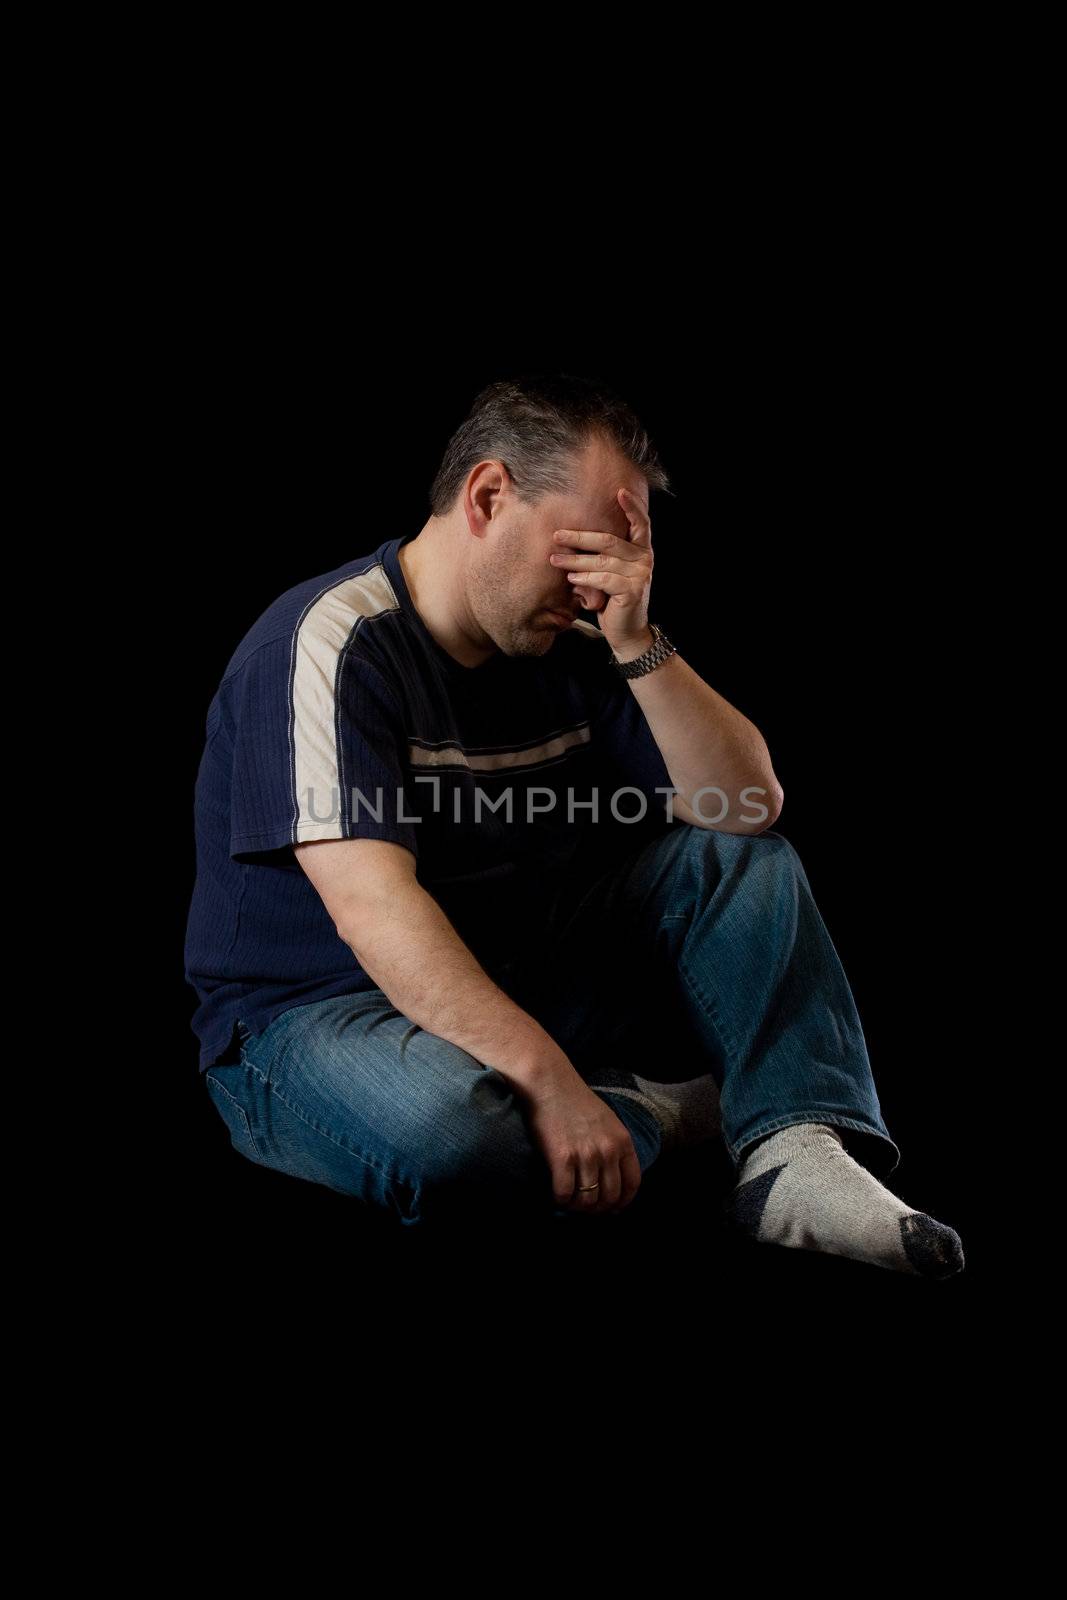 Depressed man by Talanis